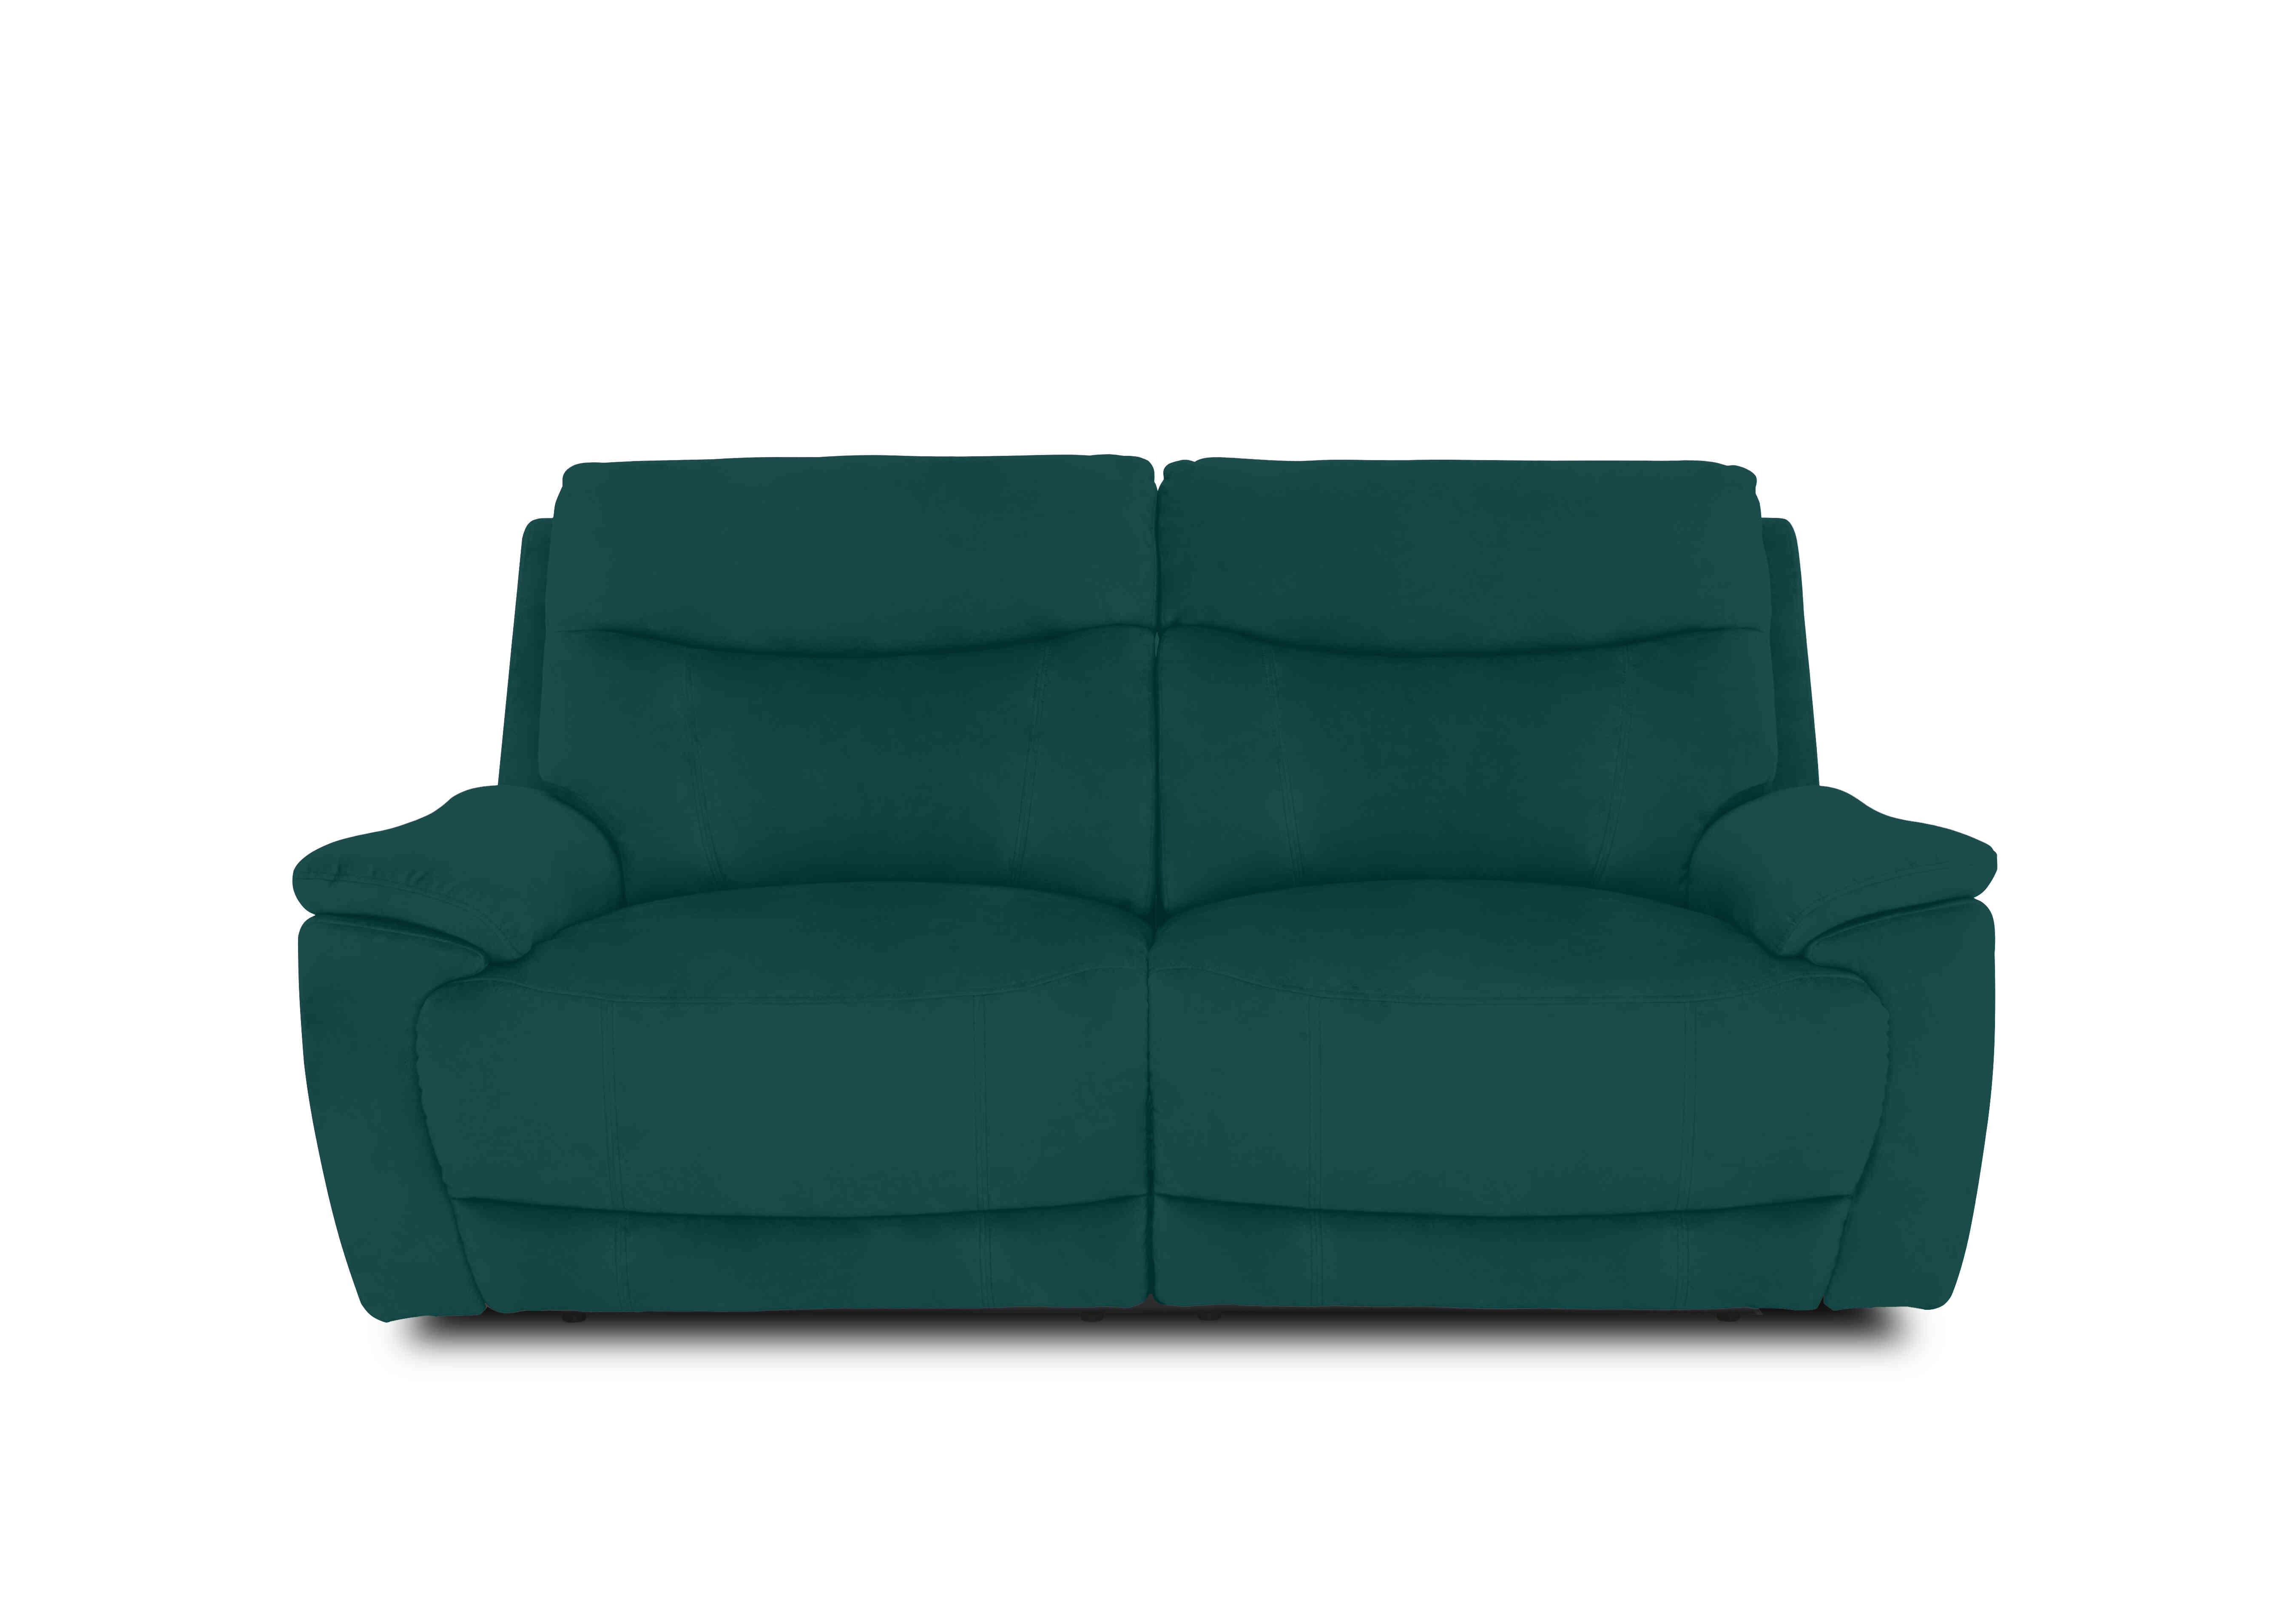 Sloane 3 Seater Fabric Sofa in 51003 Opulence Teal on Furniture Village